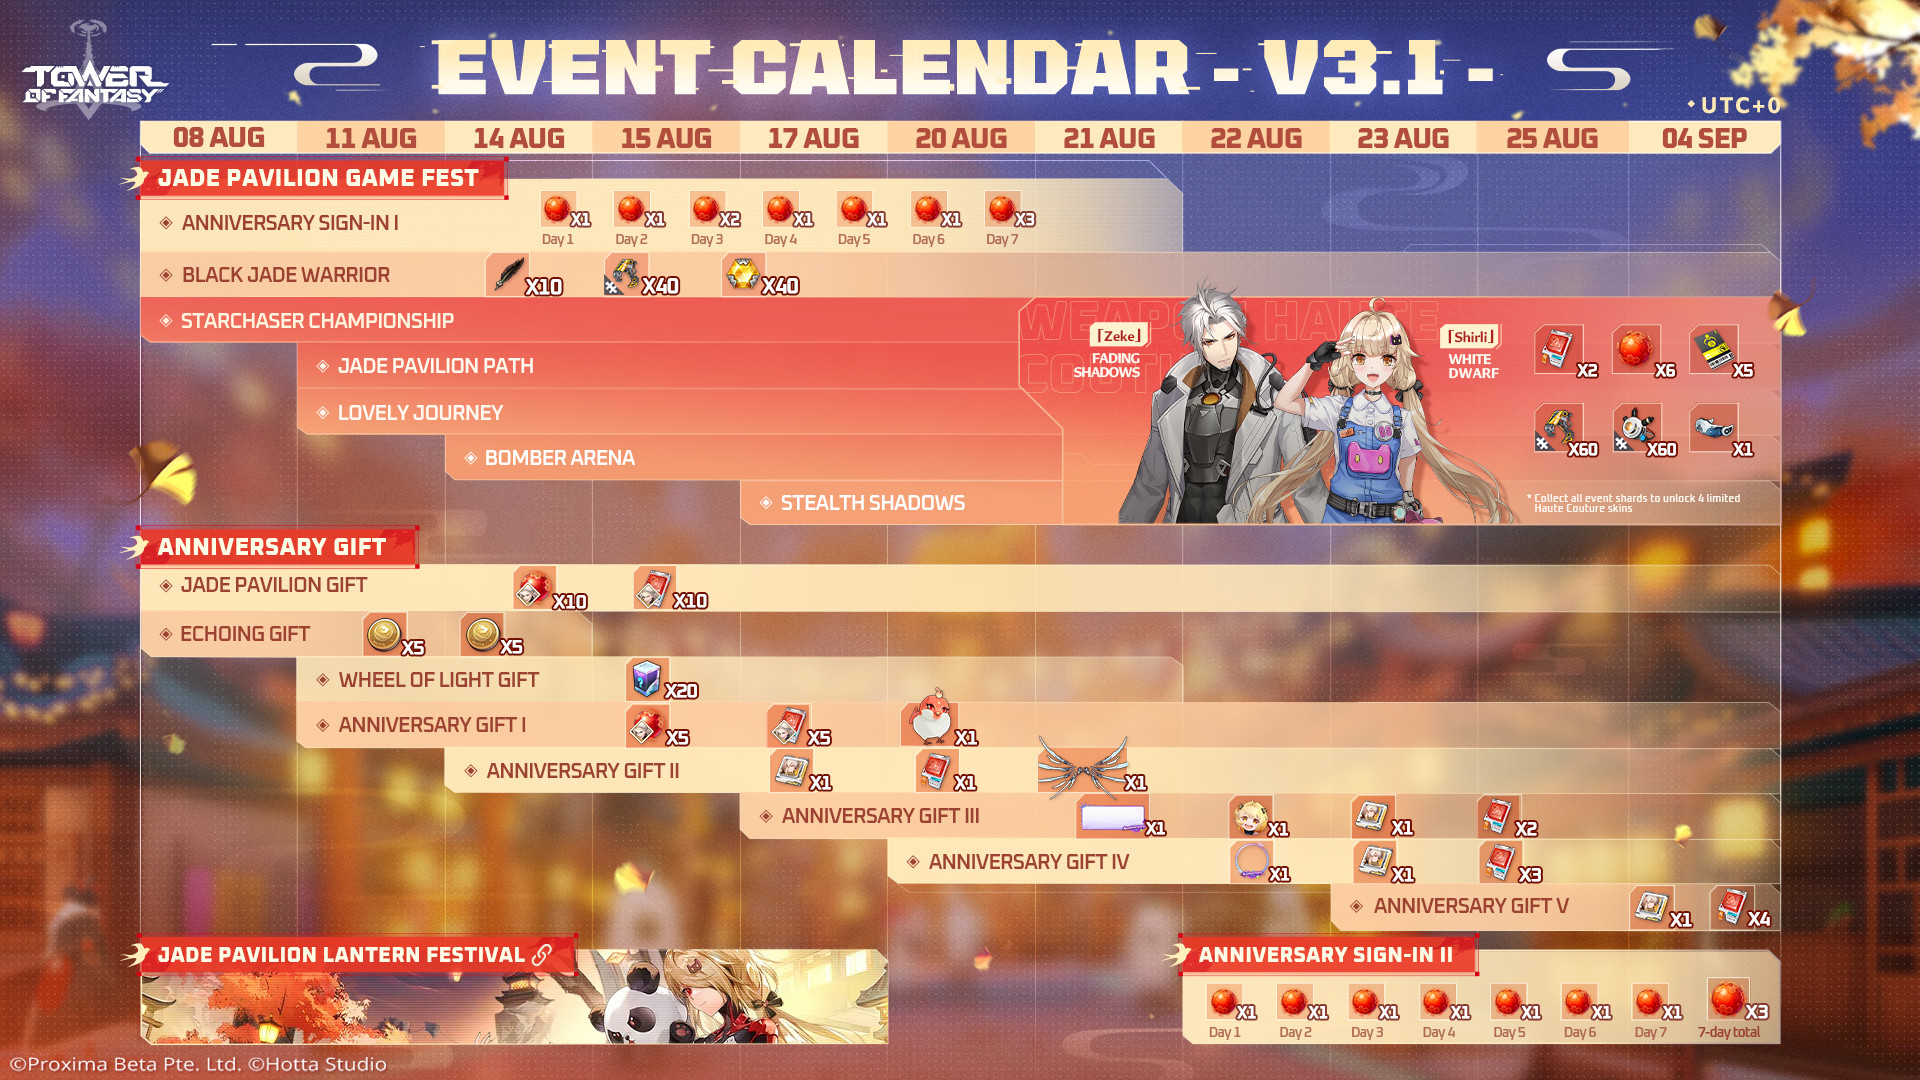 Tower of Fantasy Version 3.2 Event Calendar : r/TowerofFantasy